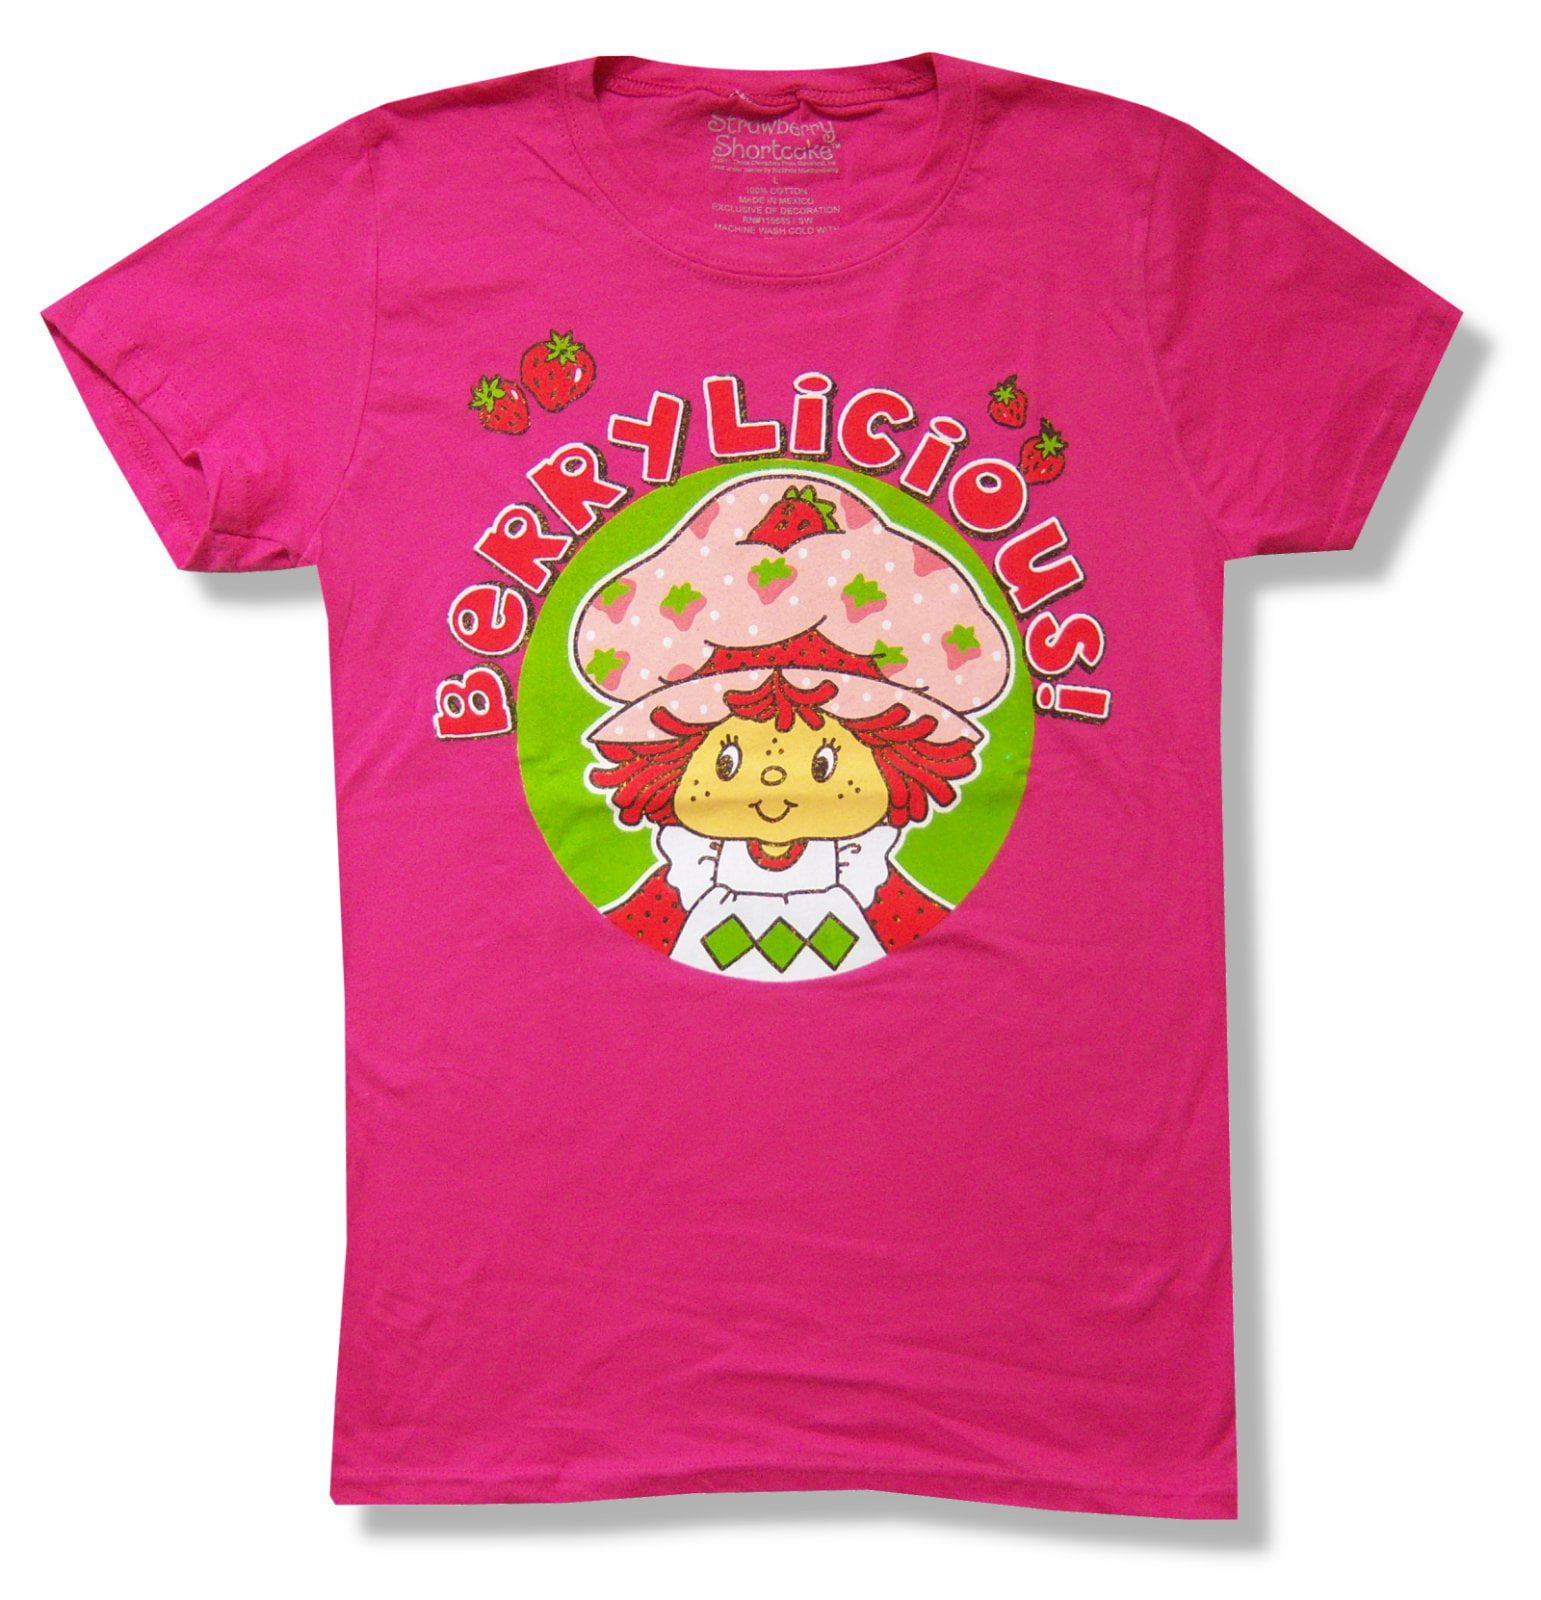 Strawberry Shortcake Pink Short Sleeve Toddler Girls T-shirt  Size 2T  Clearance 